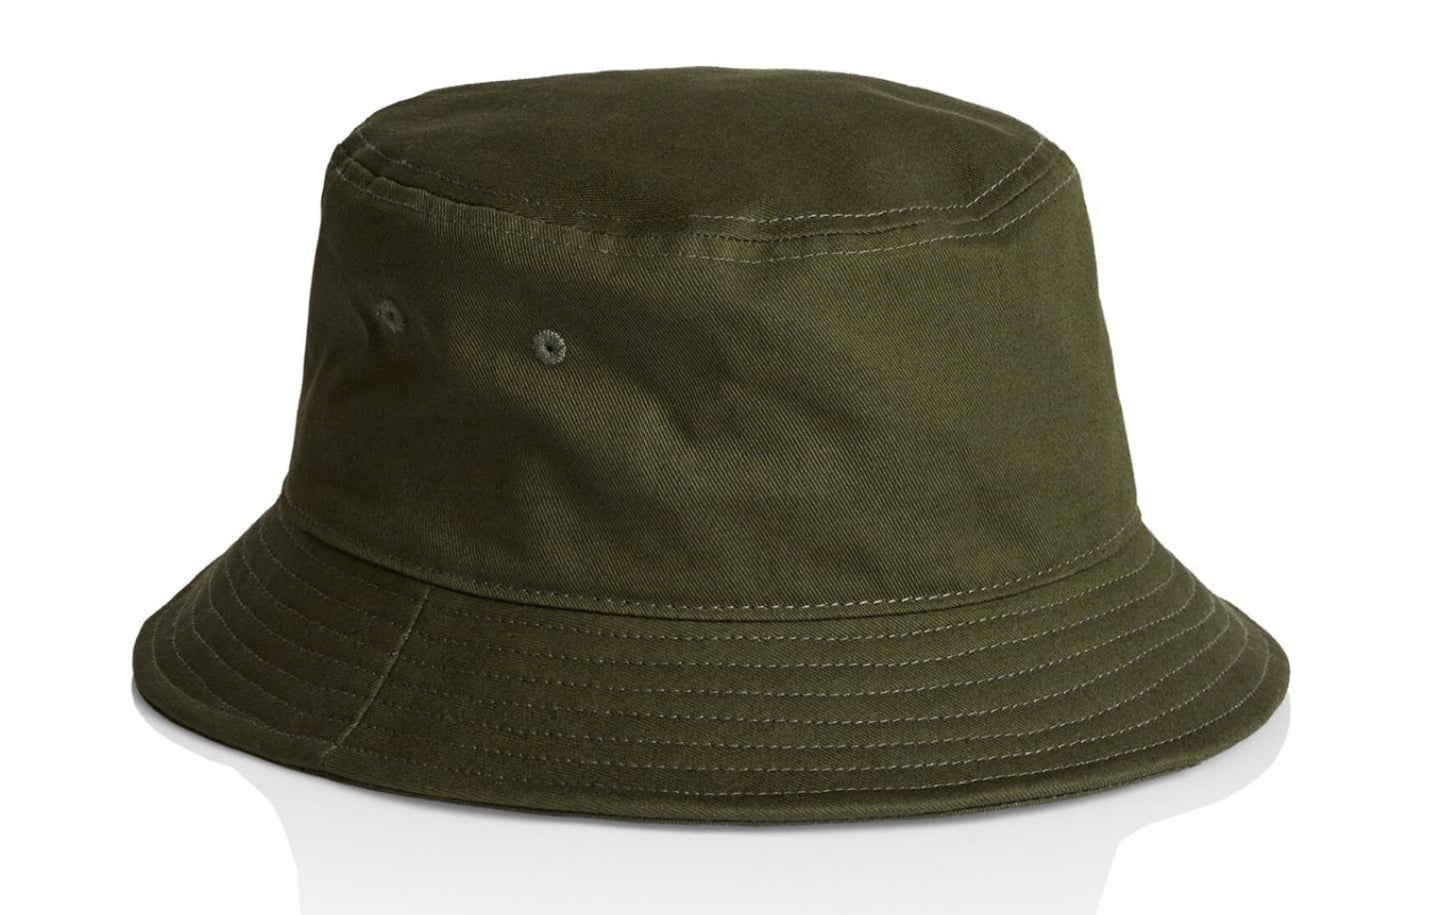 “SKATE OUTTA STRAYA” TEAM - HATS/CAPS - BEANIES - BUCKET HATS